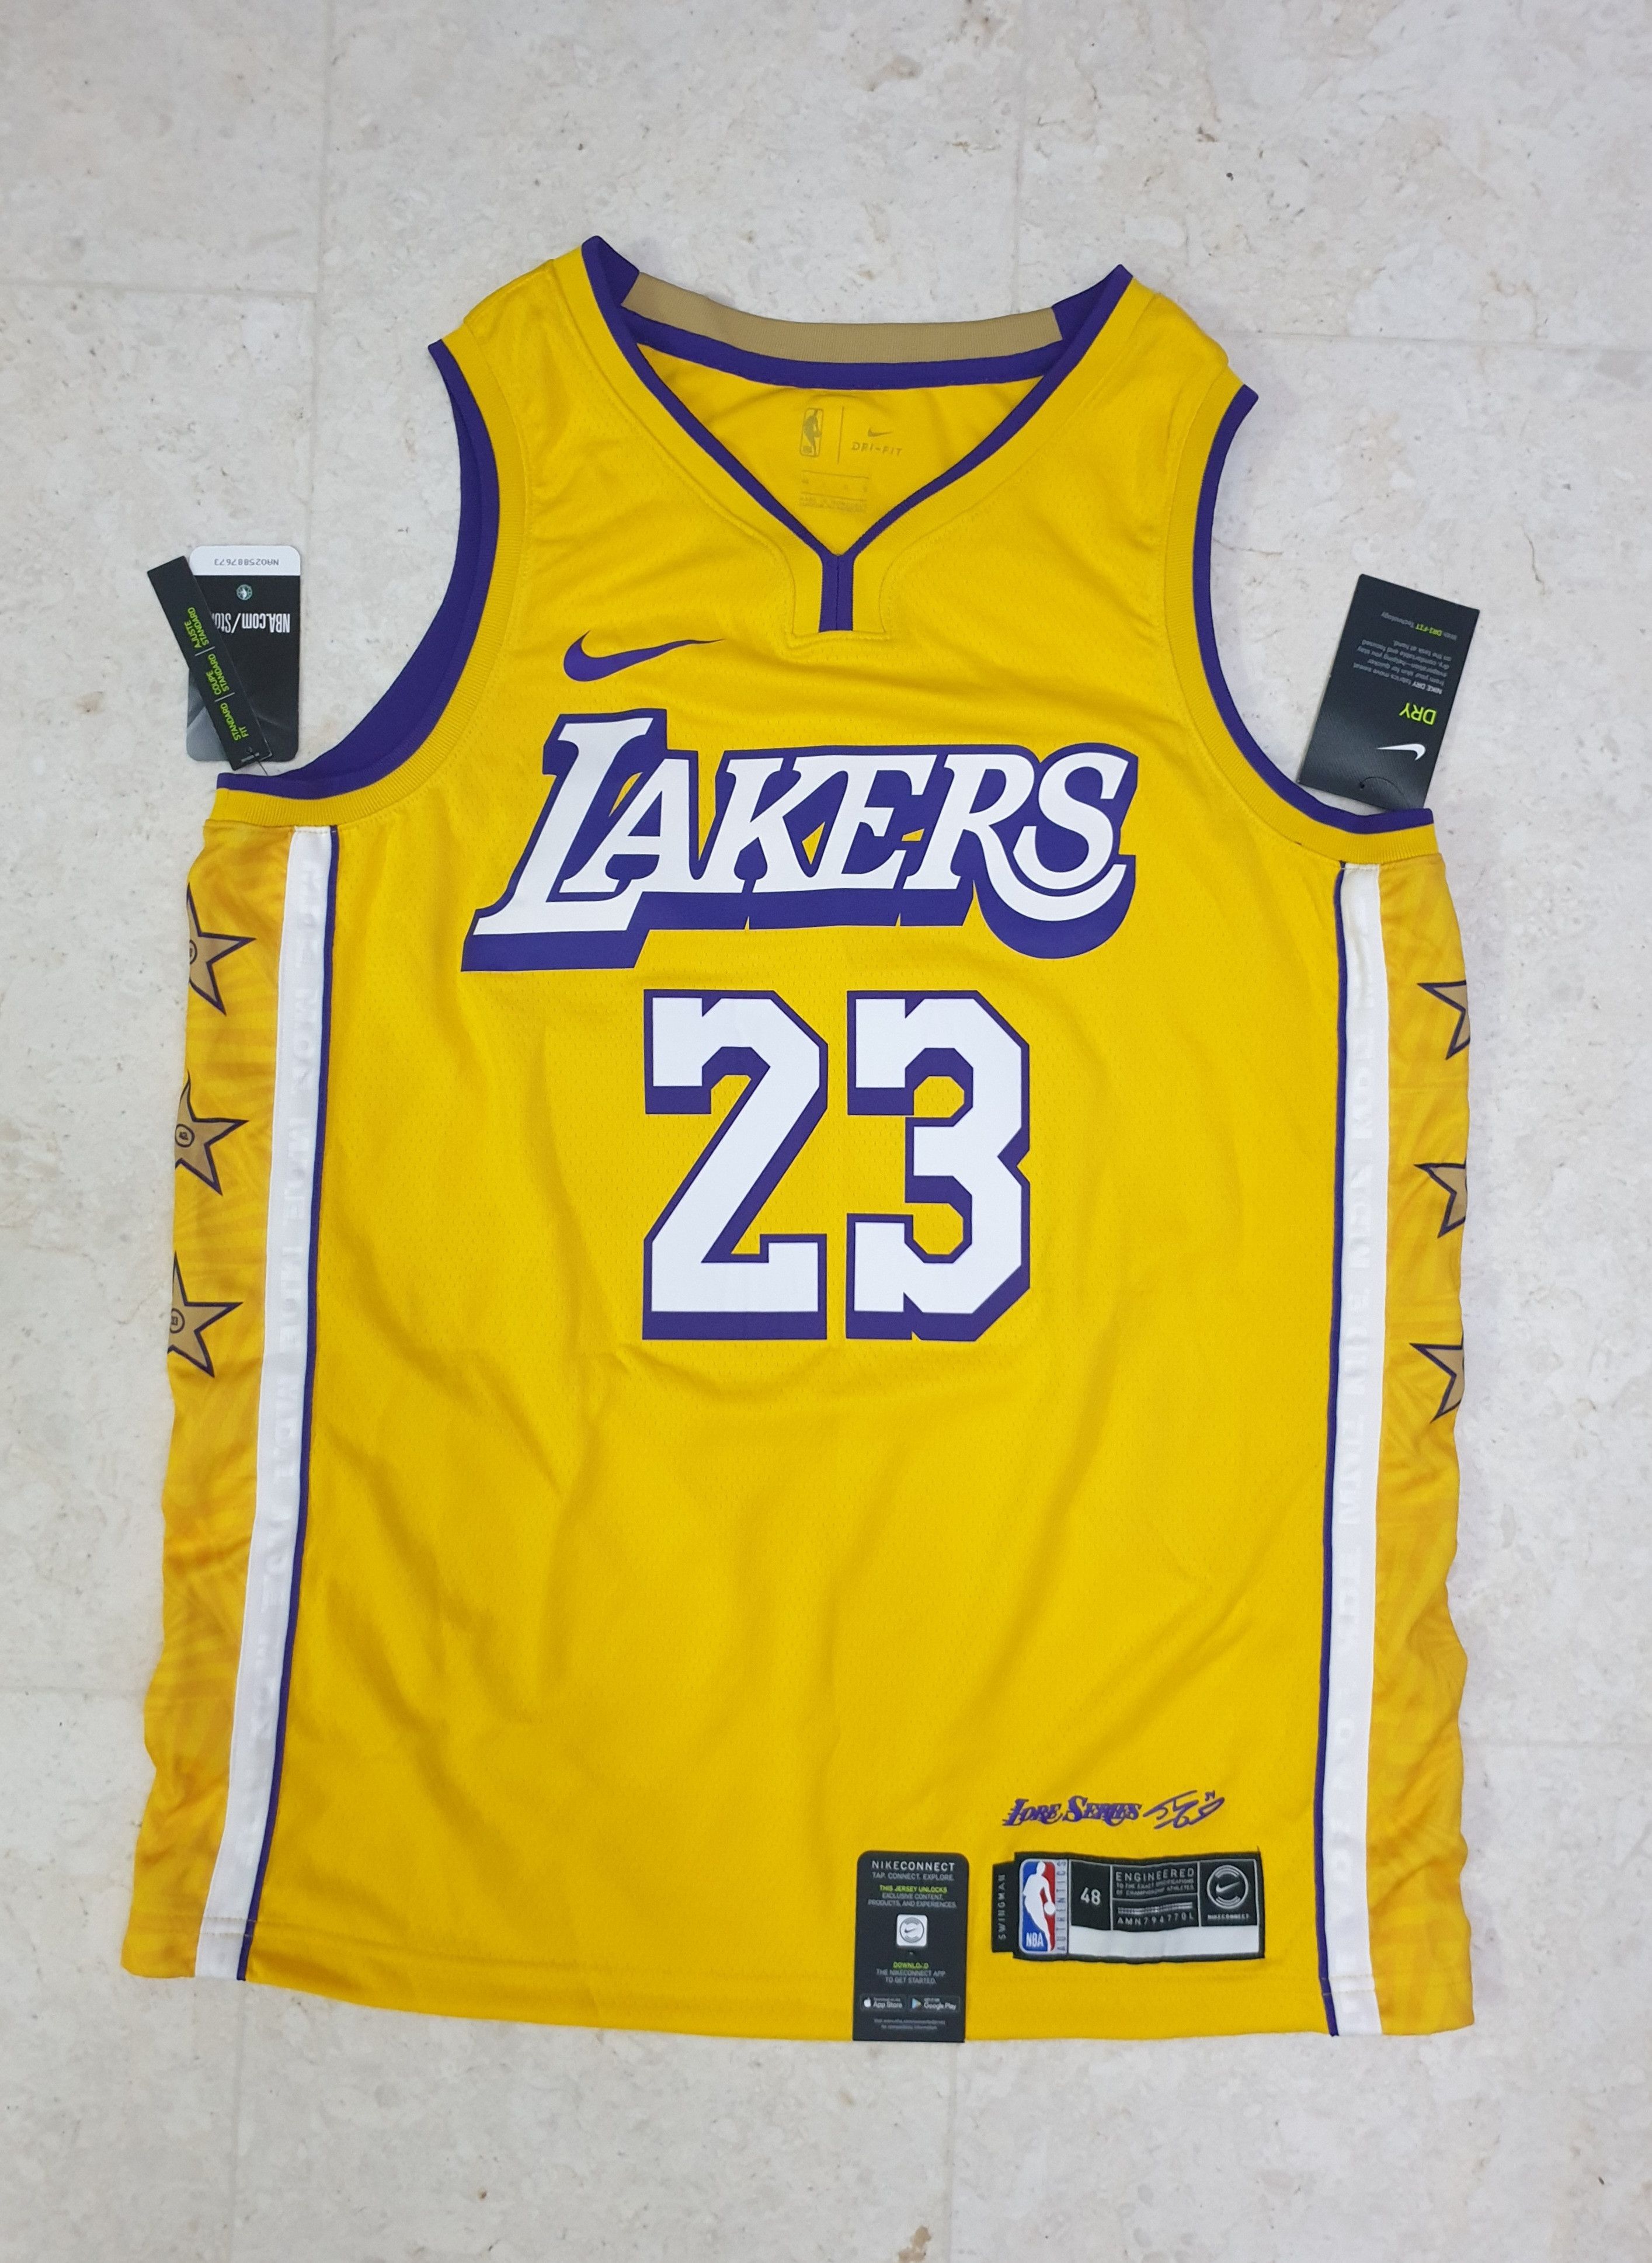 Nike BNWT Authentic Lakers 2019/20 City Edition Swingman Jersey